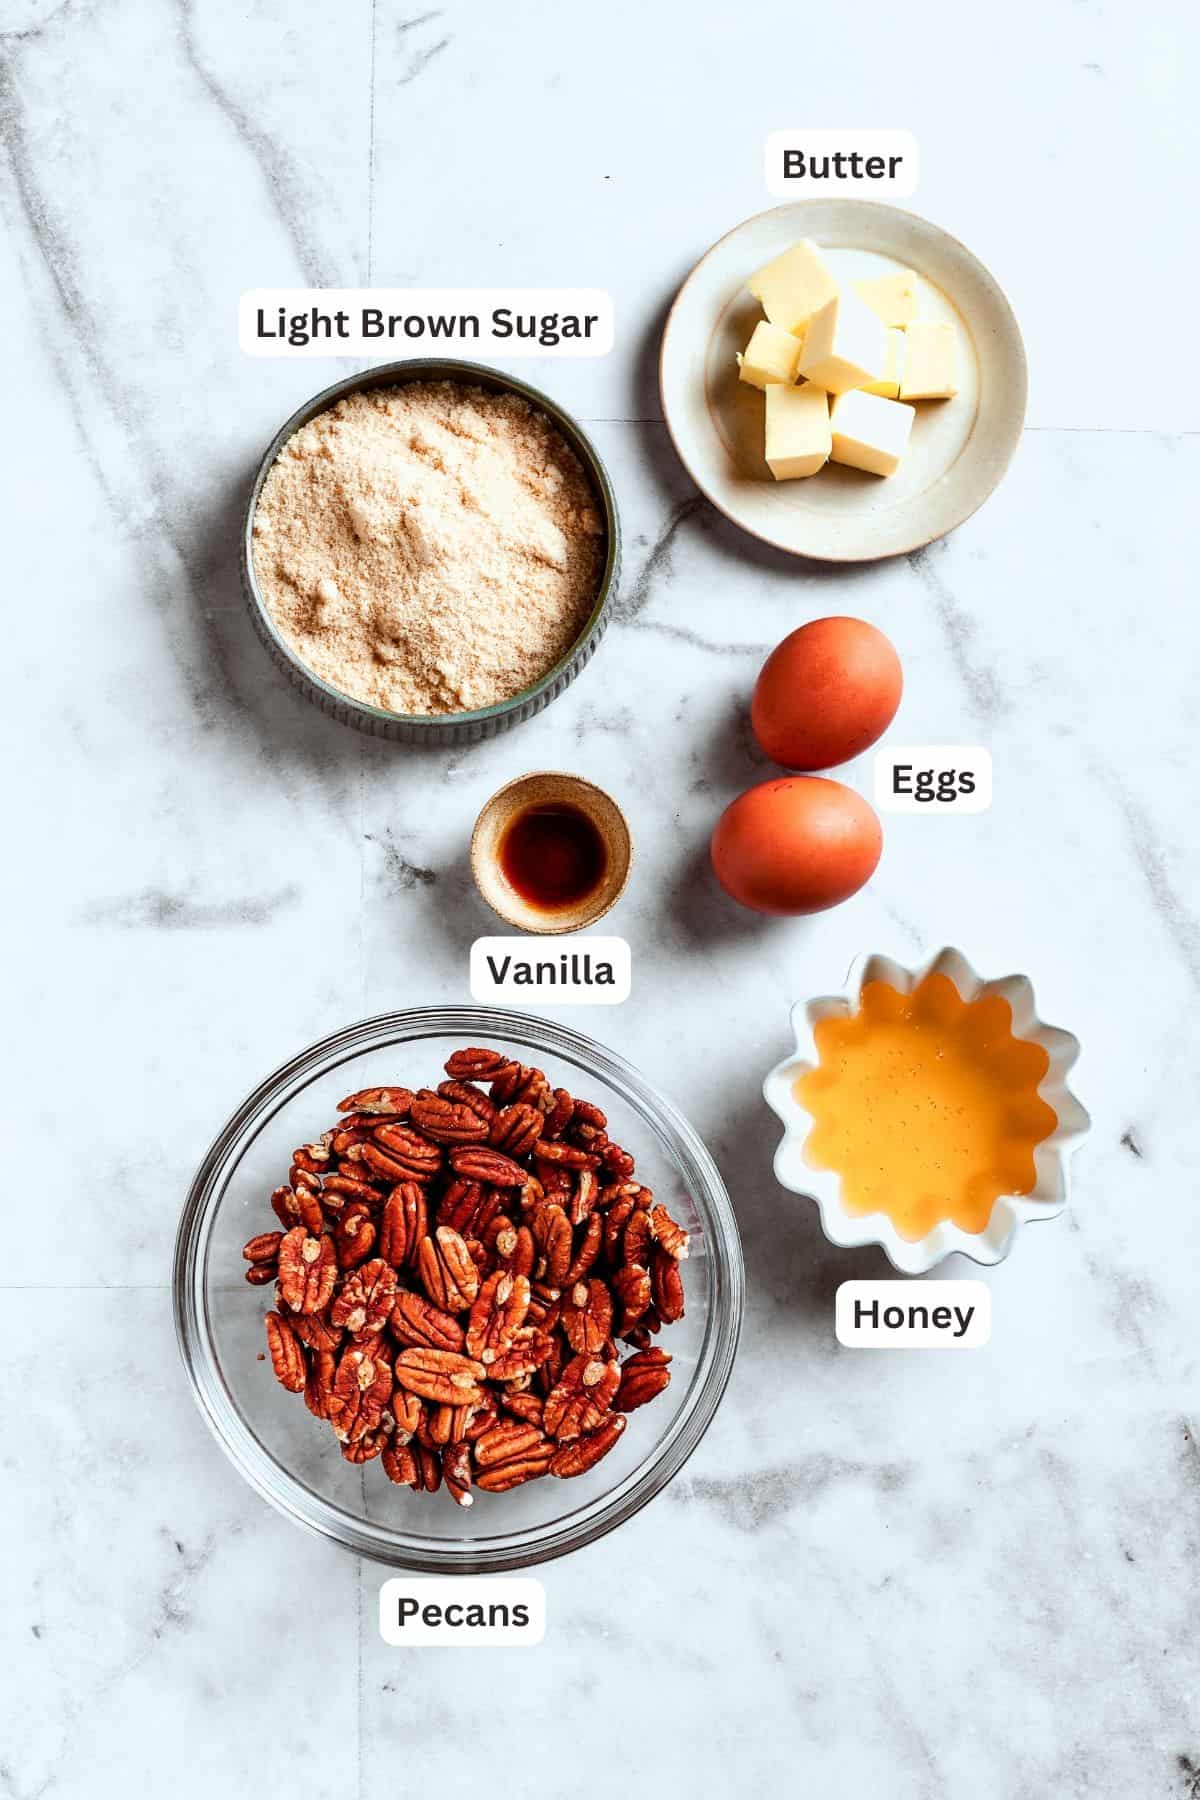 The filling ingredients for pecan pie brownies are shown: pecans, vanilla, eggs, honey, brown sugar.